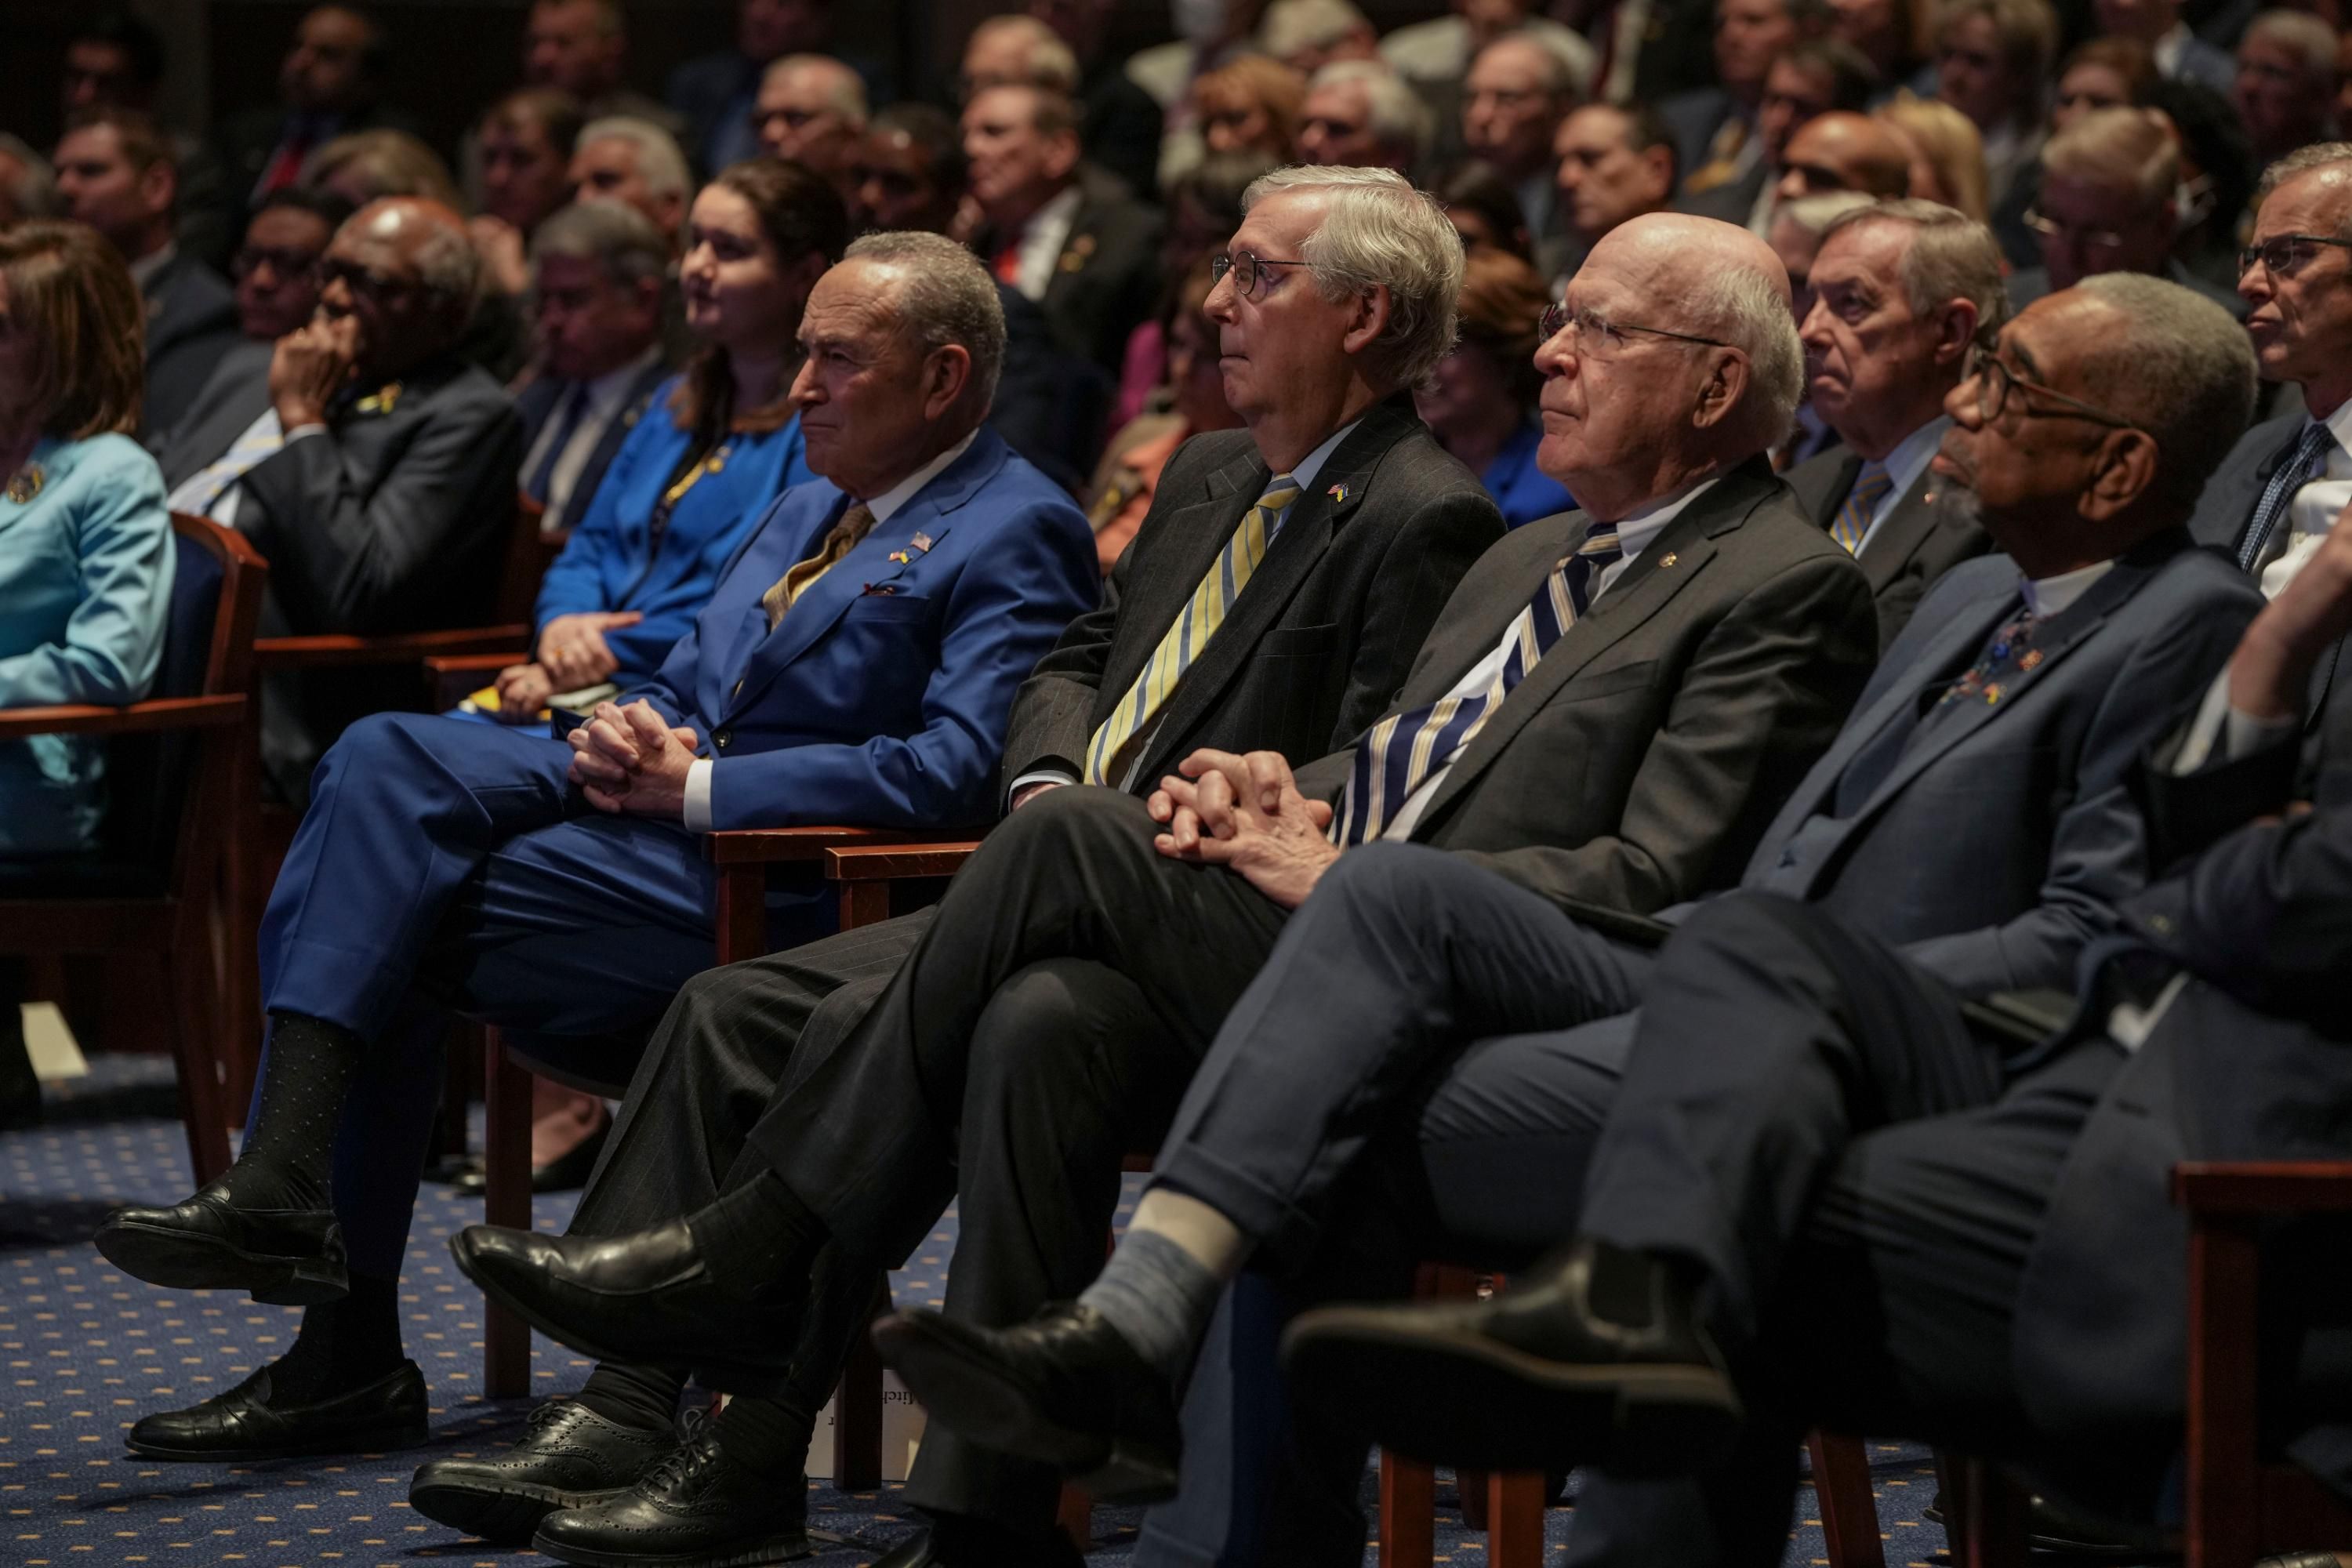 Senate Majority Leader Chuck Schumer and Minority Leader Mitch McConnell watch a speech